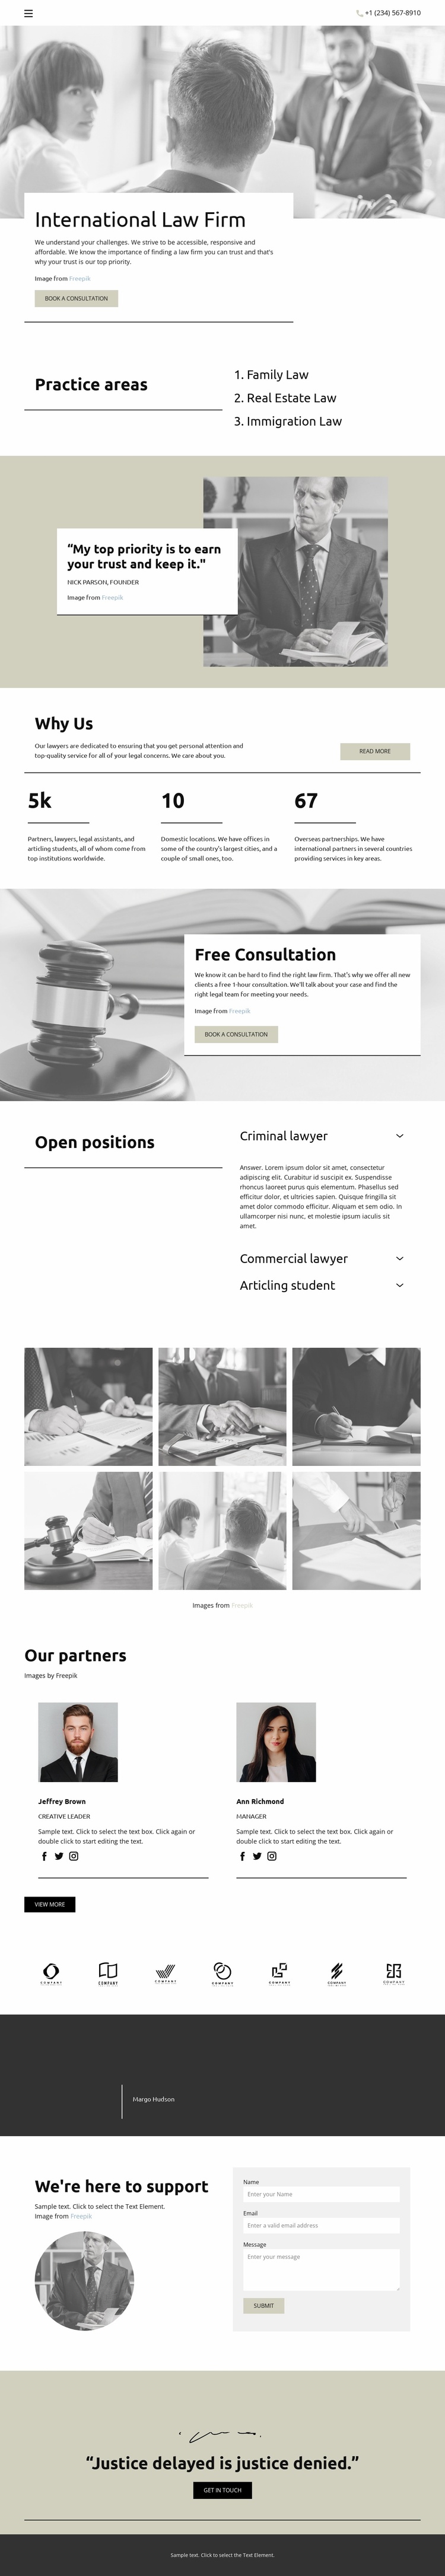 International Law Firm Ecommerce Website Design